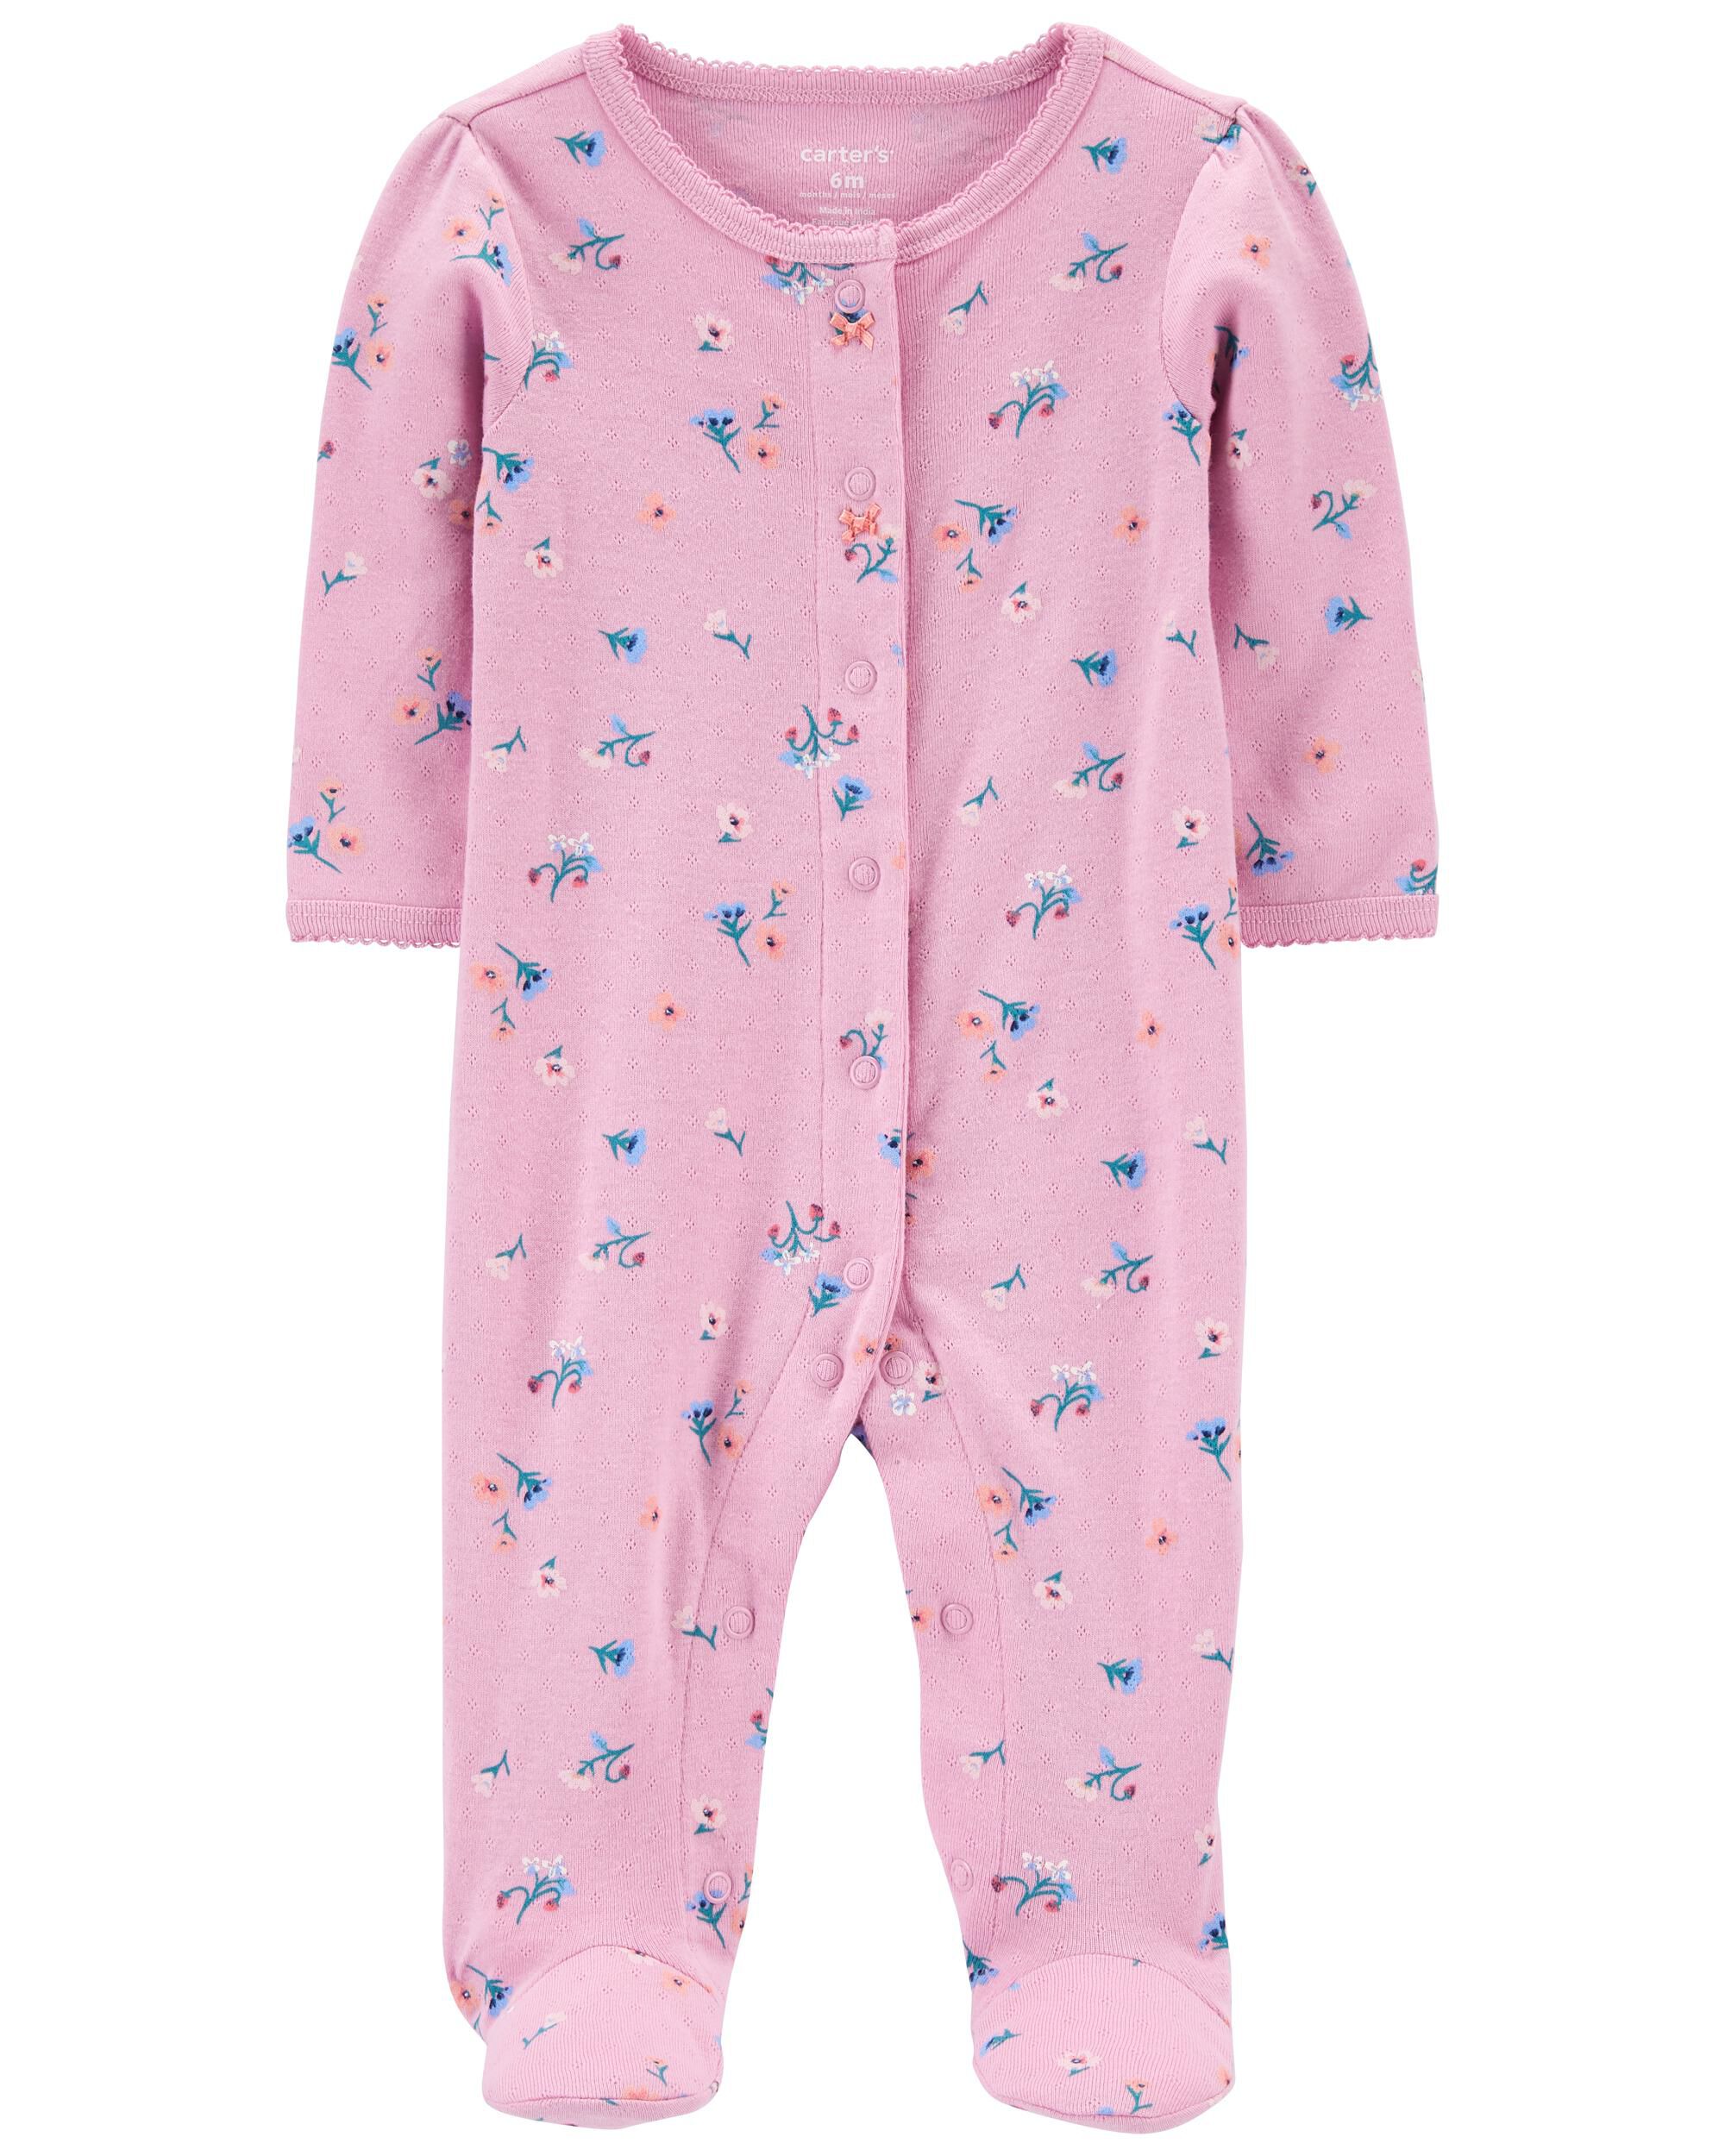 Carter's Winter Fleece Footed Sleeper Pajamas Polka Dot Penguin 18M 